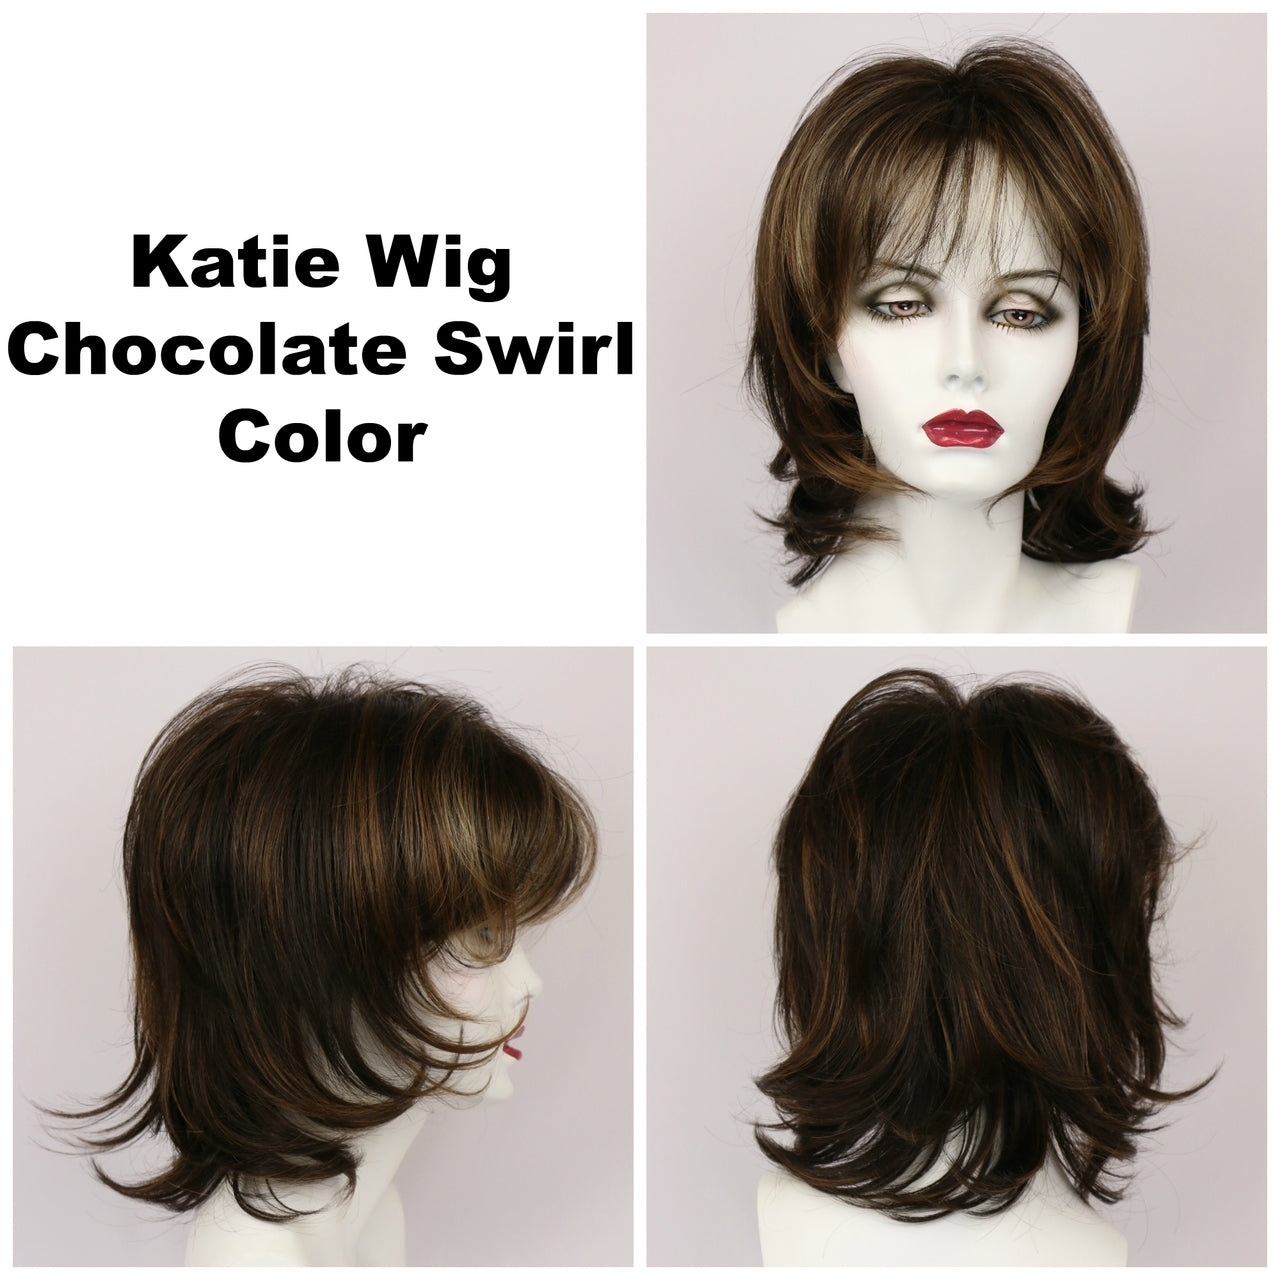 Chocolate Swirl / Katie / Medium Wig